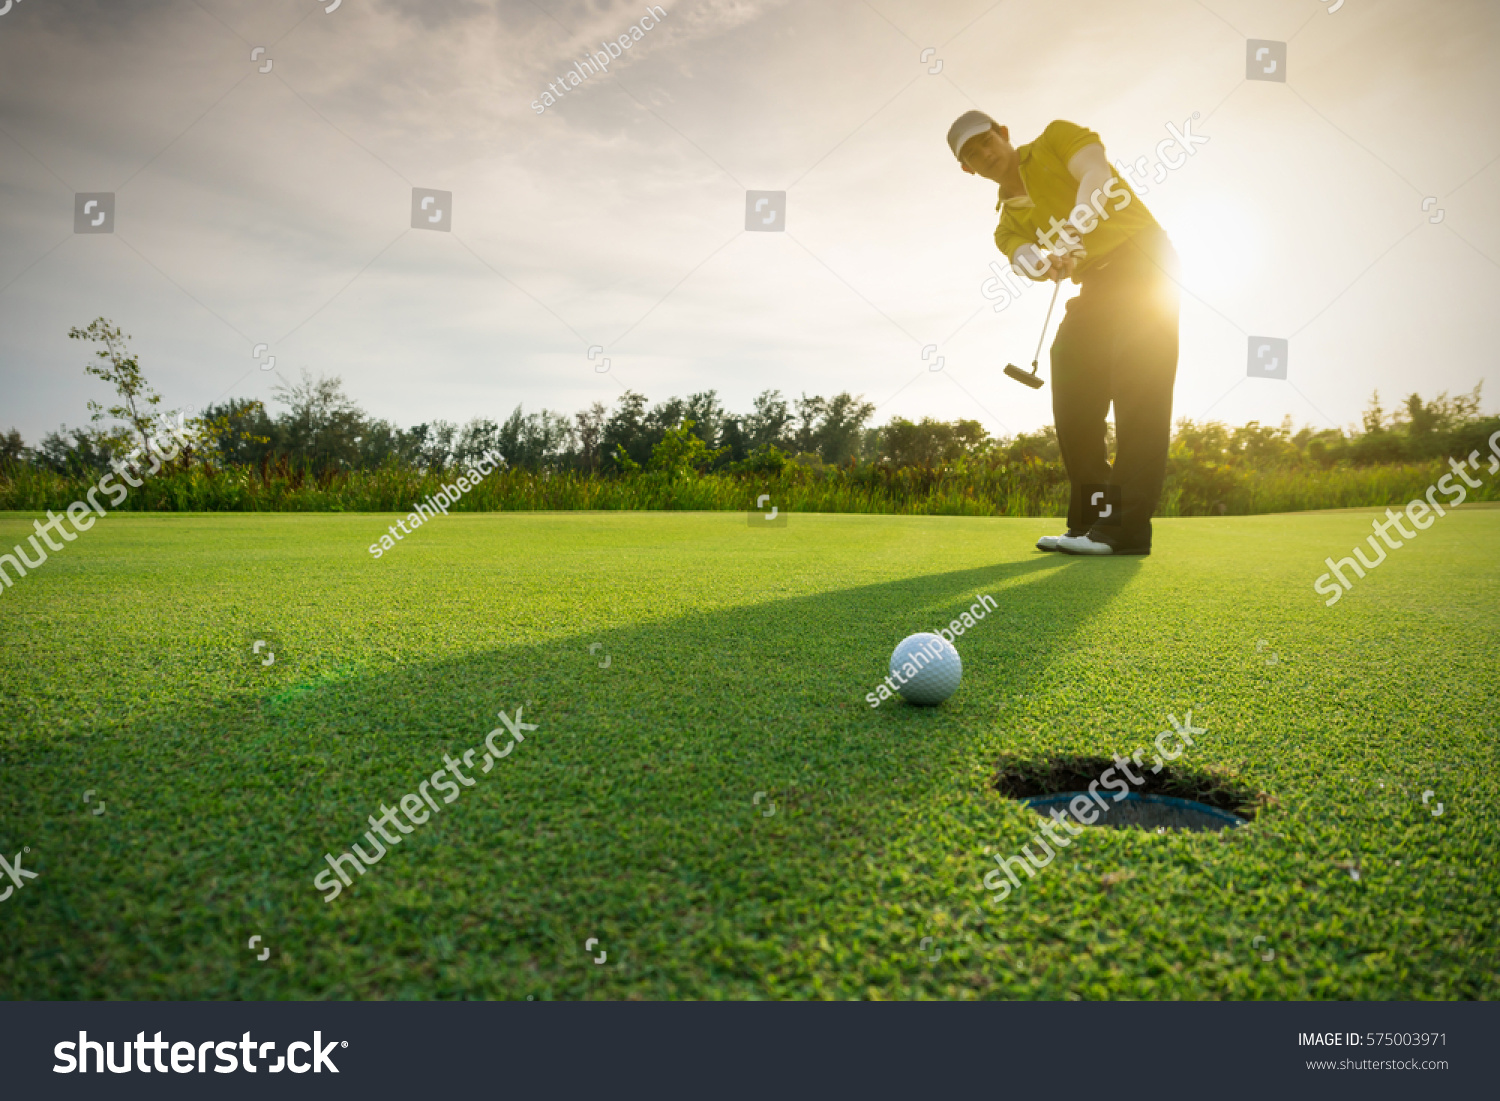 Golfer putting golf ball on the green golf, lens flare on sun set evening time. #575003971